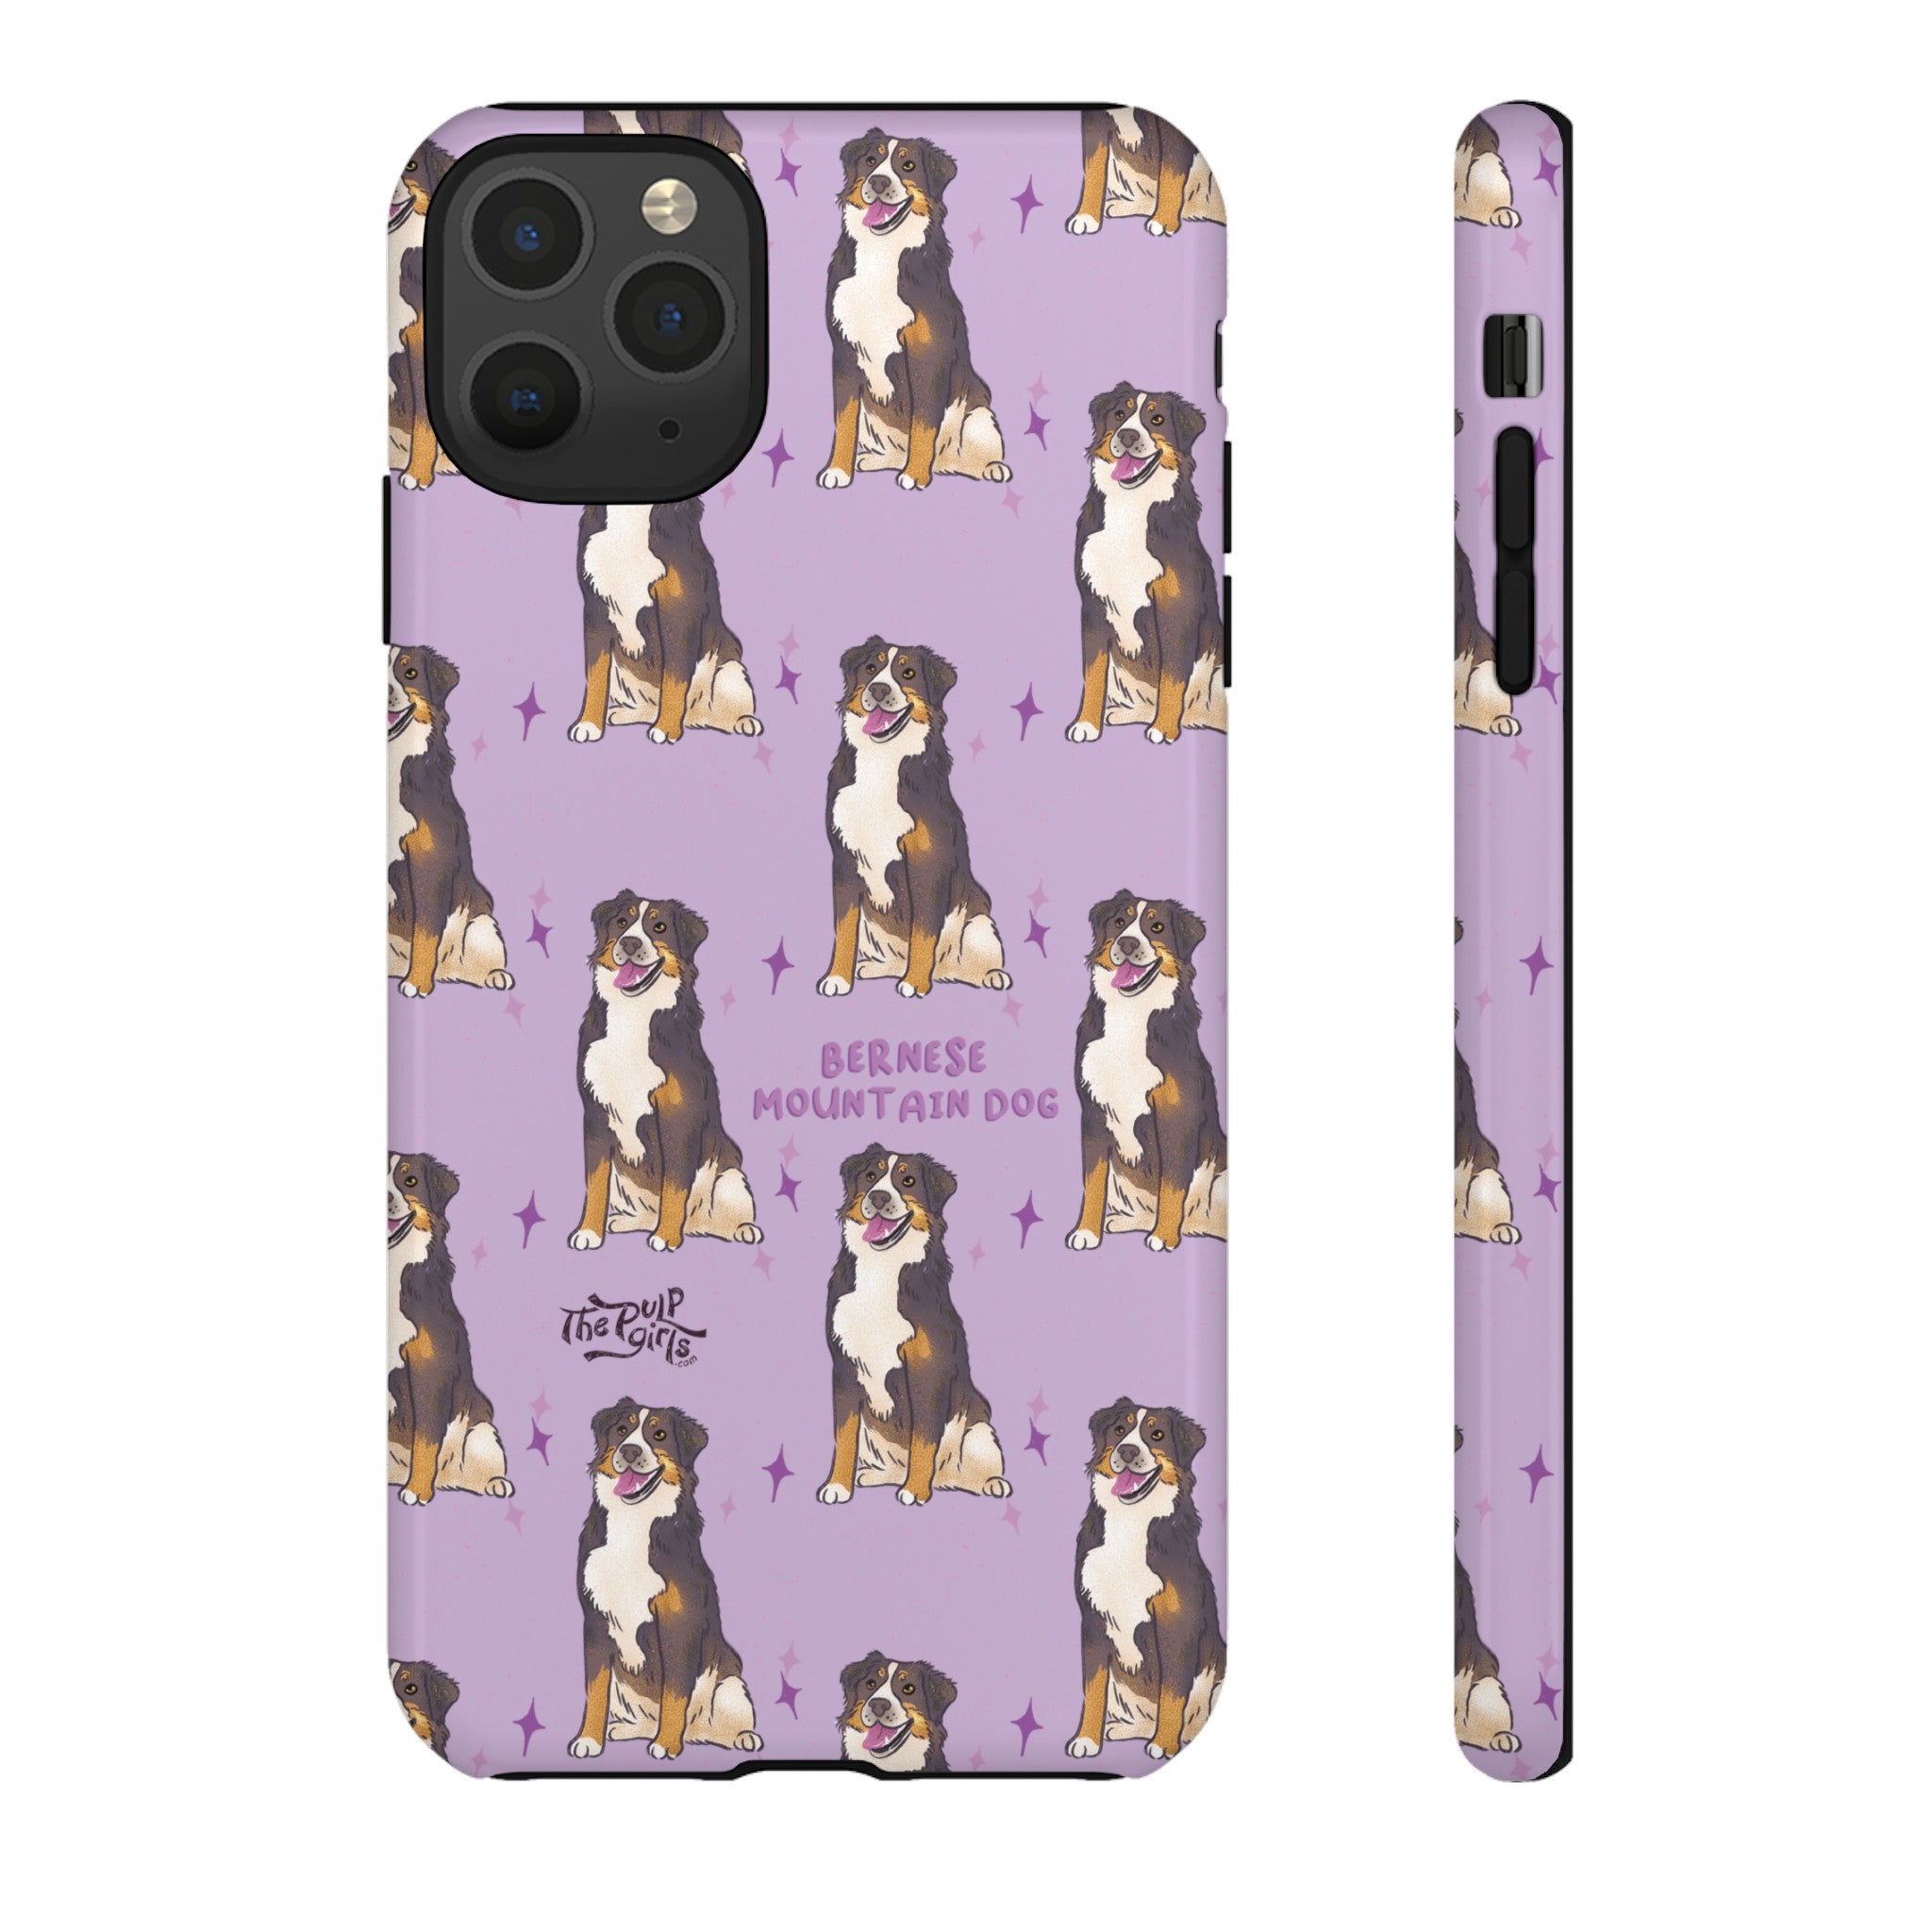 Bernese Mountain Dog Lover Phone Case